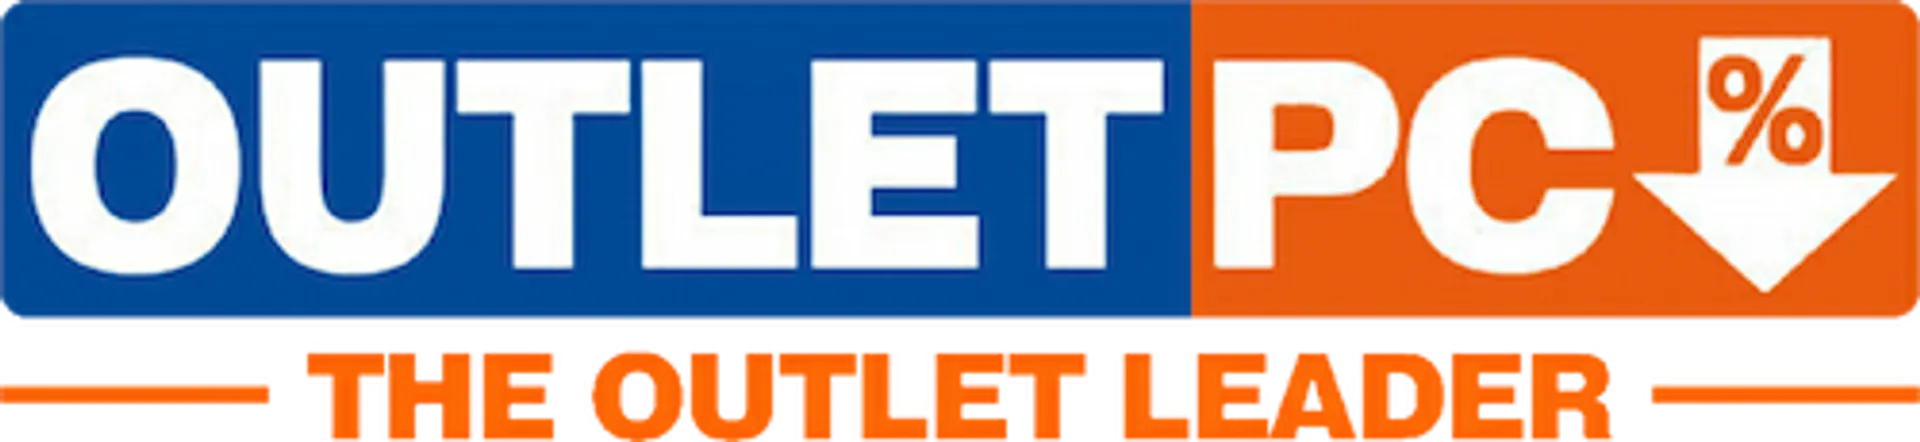 OUTLET PC logo